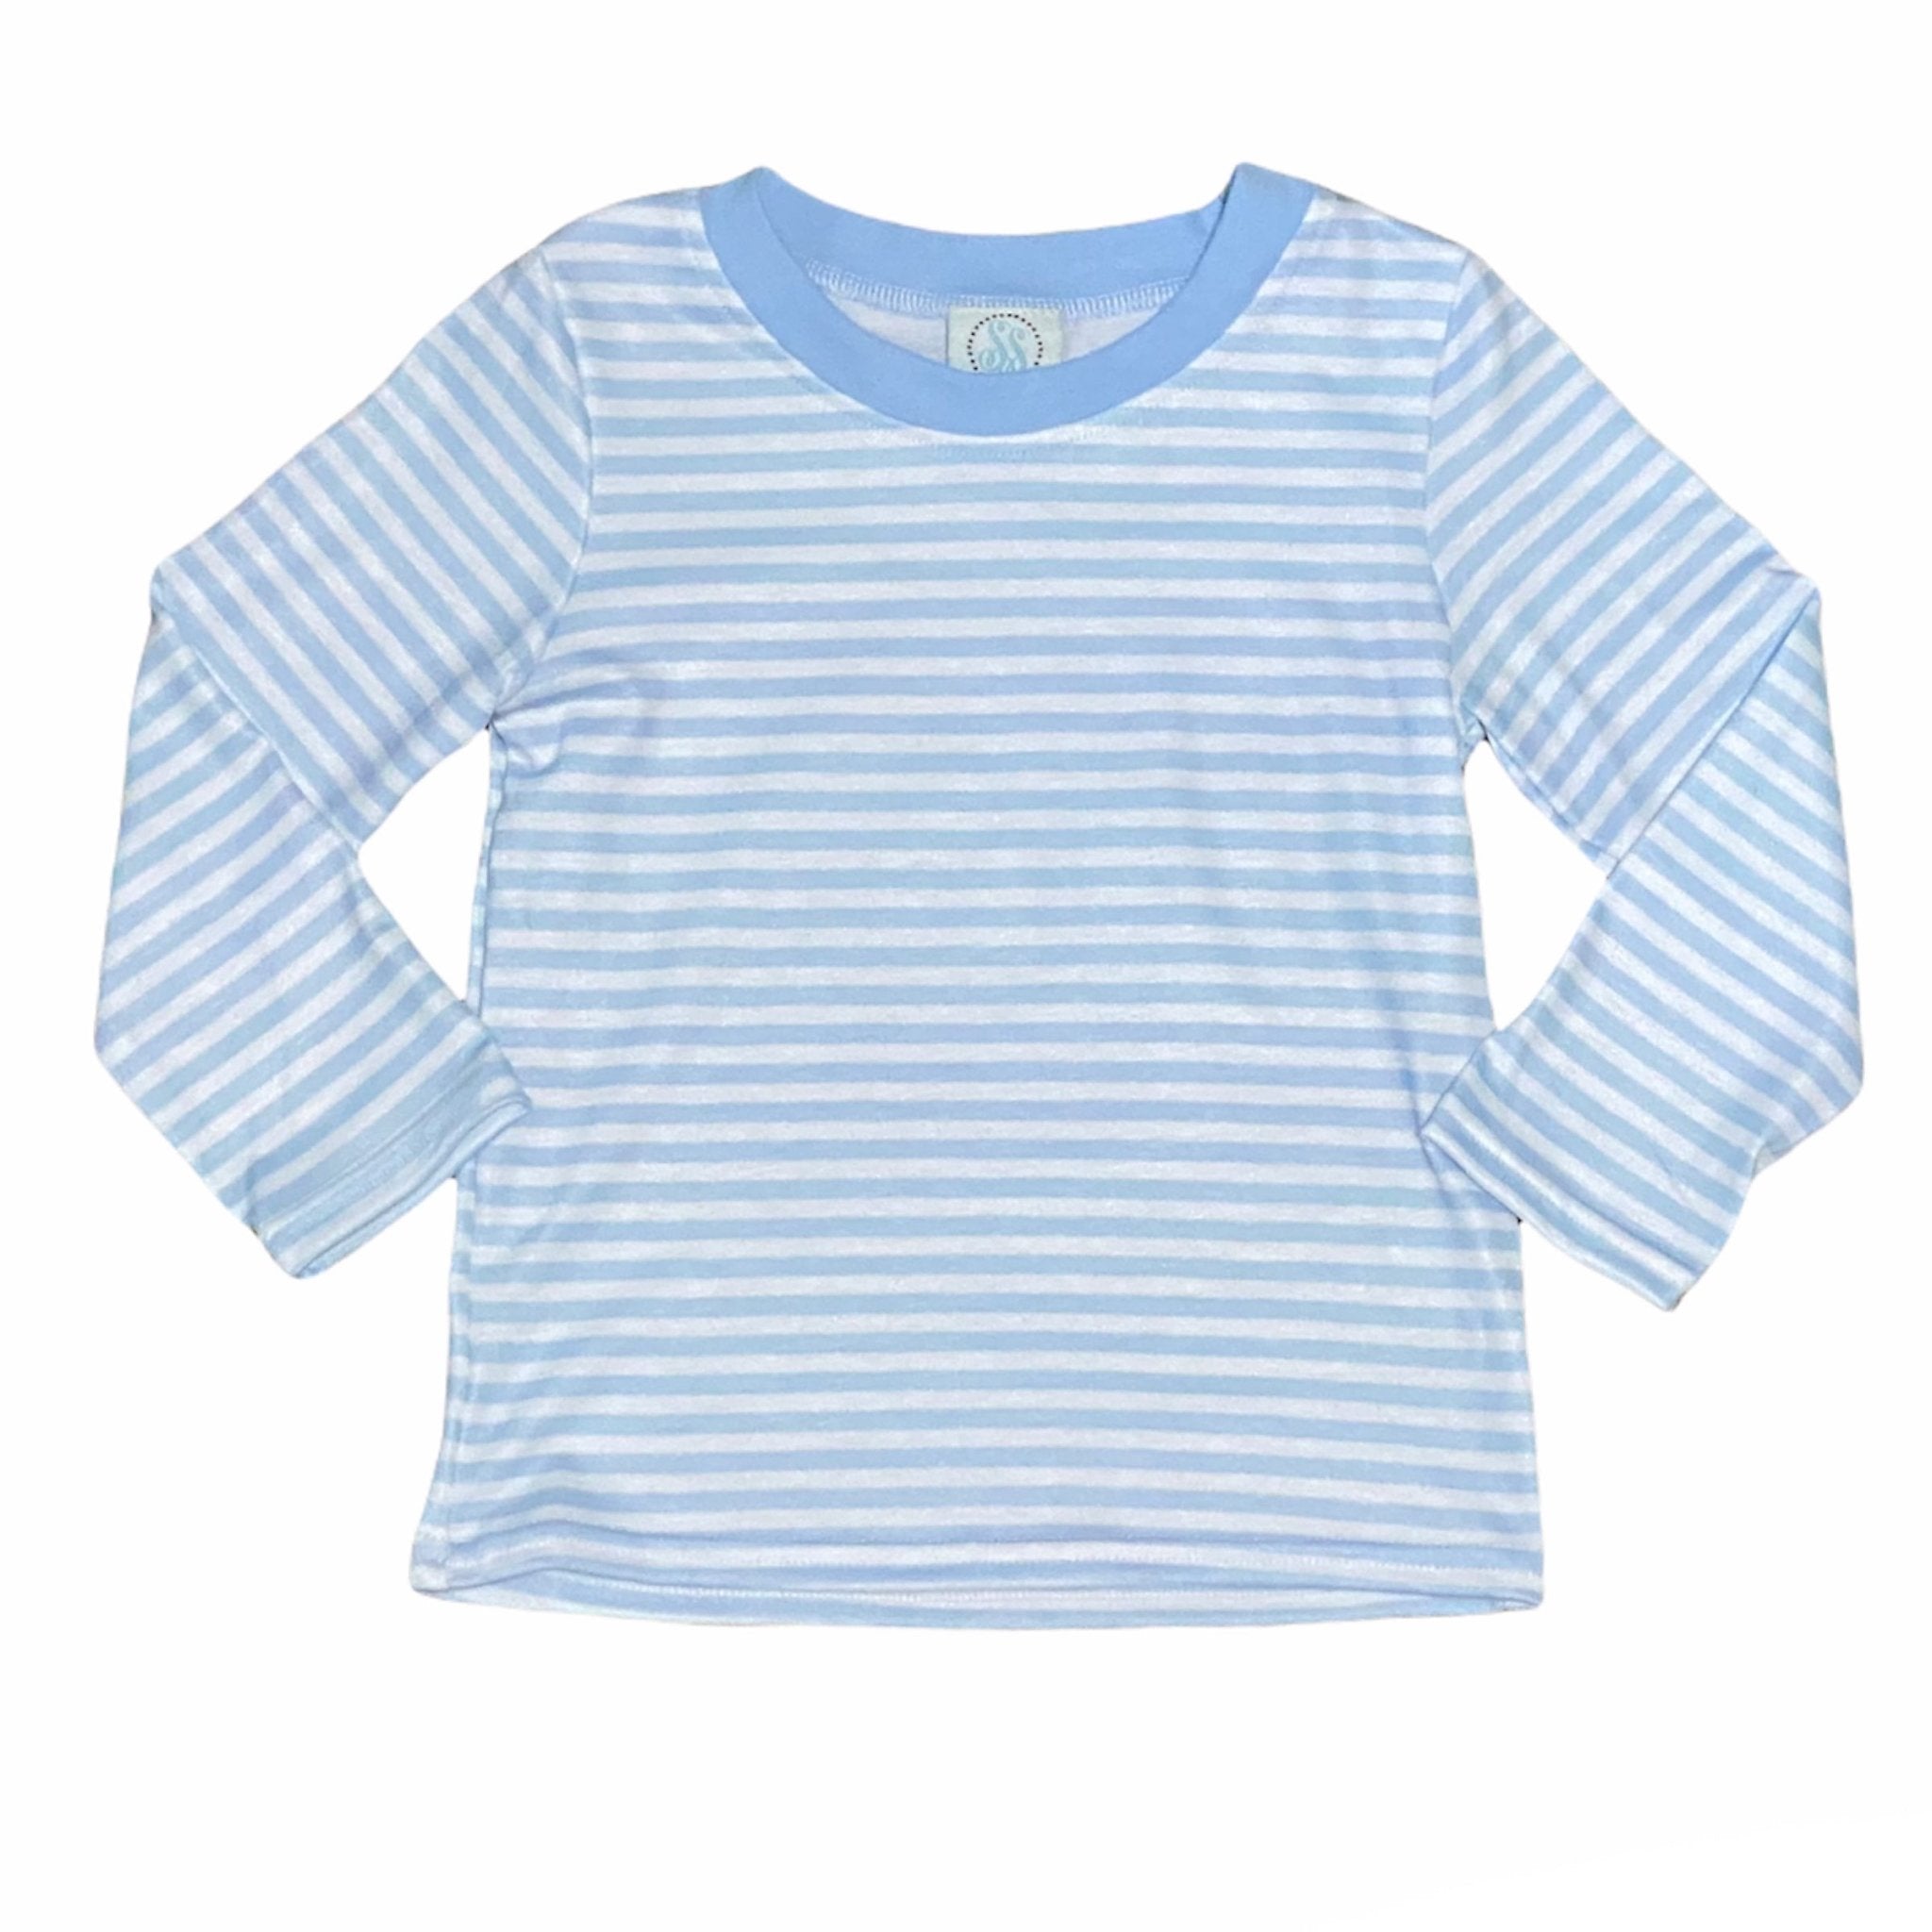 Blue Stripe Shirt - Smocked South